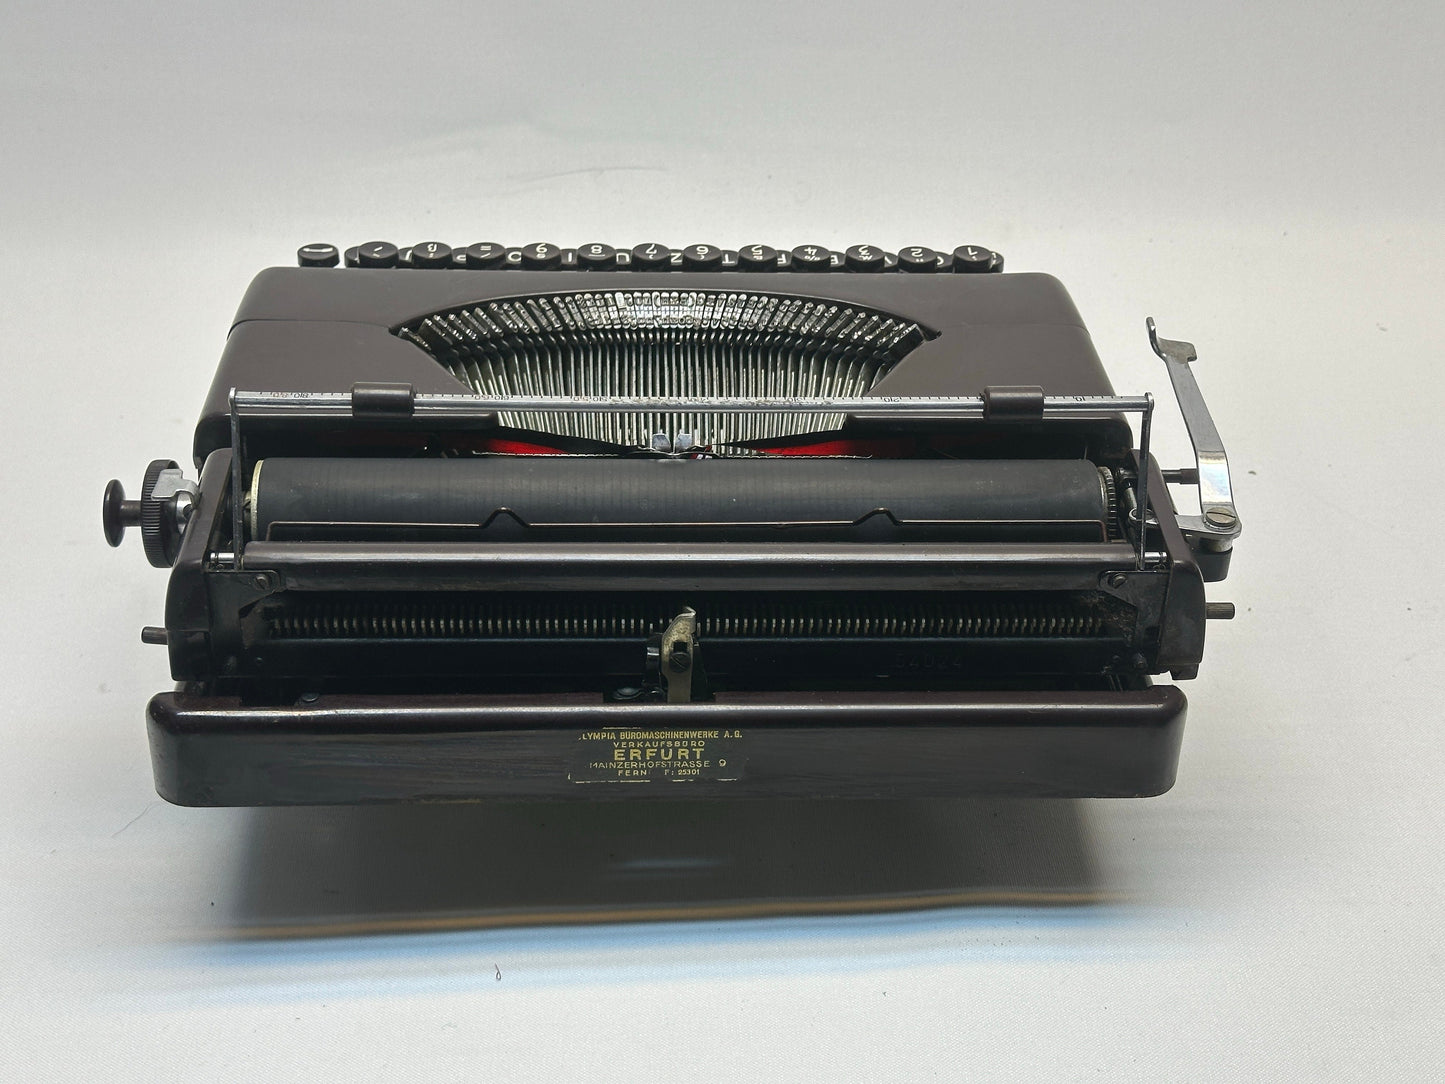 Olympia Plana Typewriter in Burgundy with Burgundy Keyboard - Antique 1960 Model